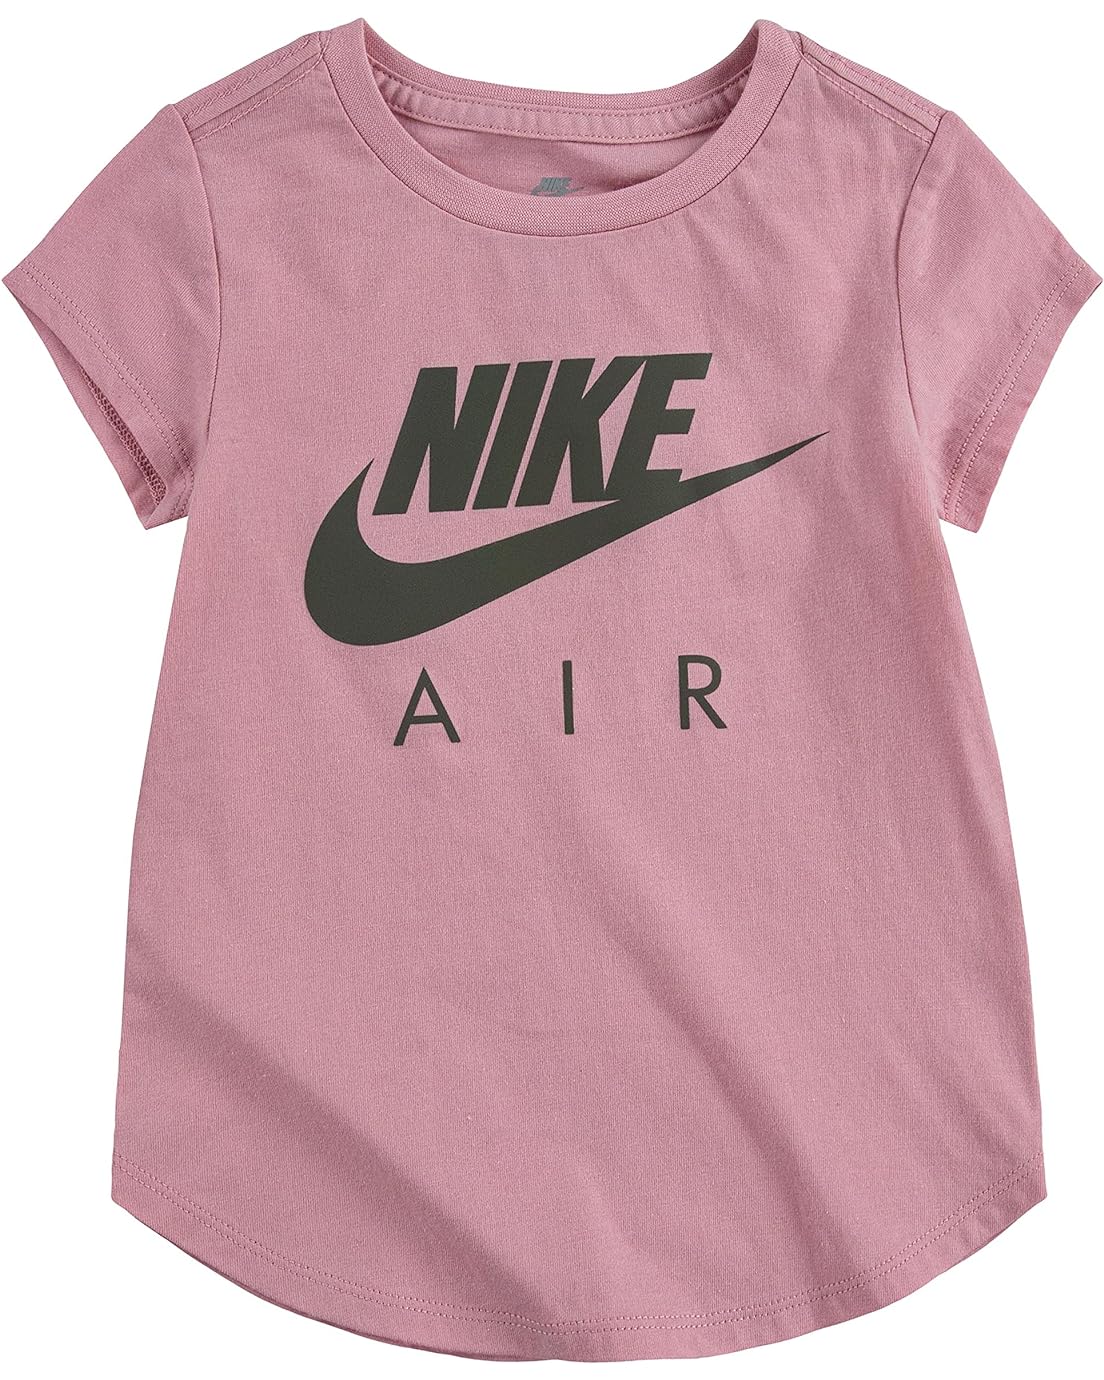 Nike Kids Air Rainbow Reflective Tee (Toddler)